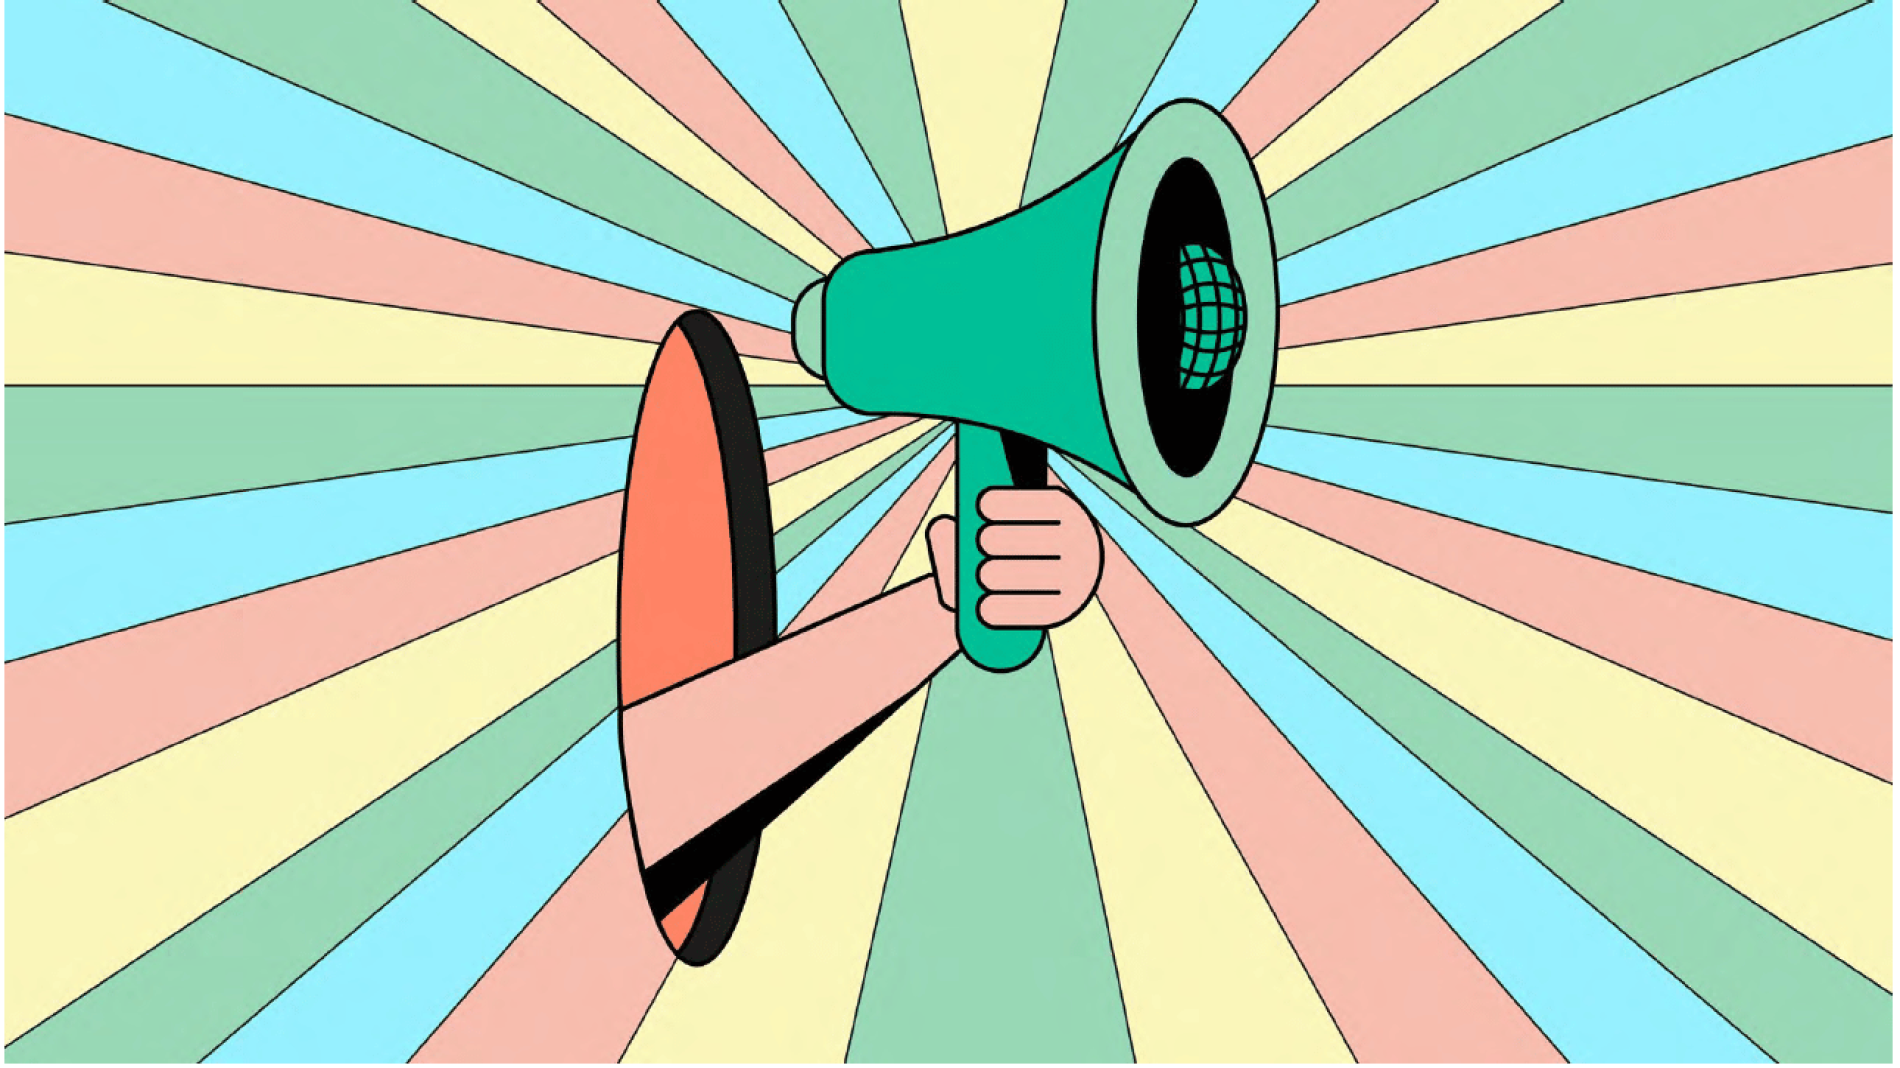 Illustration of a hand holding a megaphone